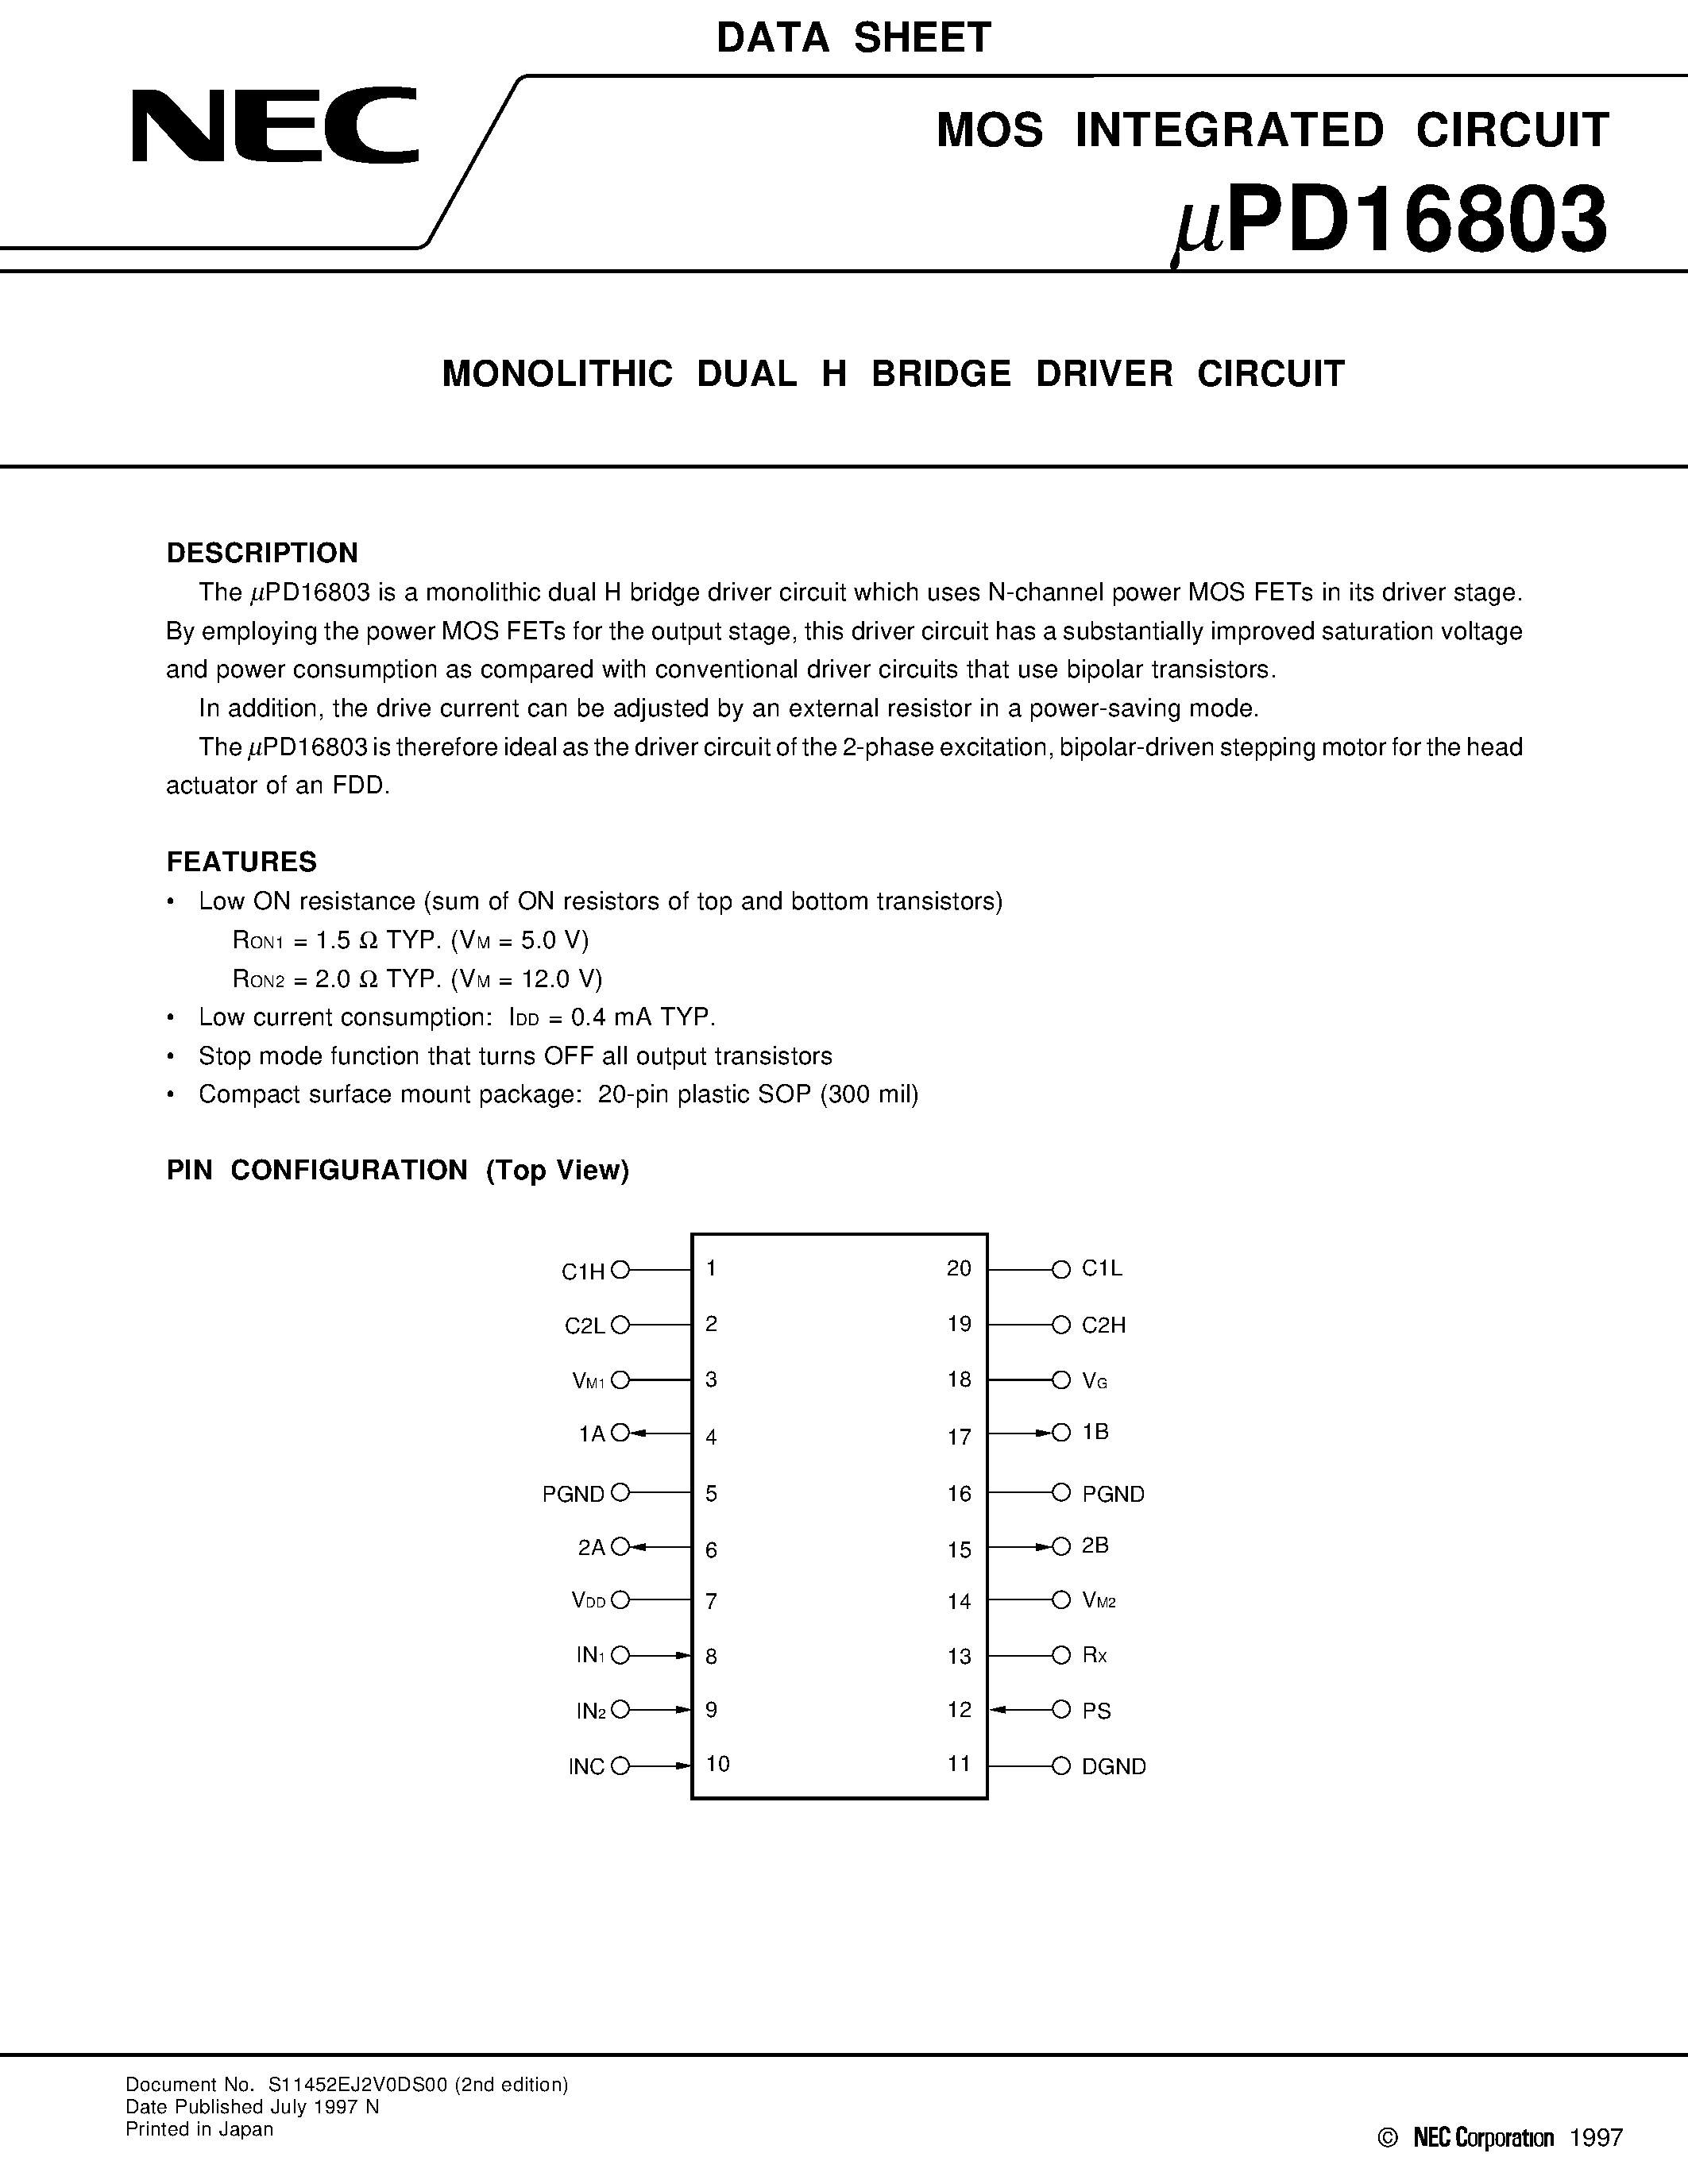 Даташит UPD16803GS - MONOLITHIC DUAL H BRIDGE DRIVER CIRCUIT страница 1